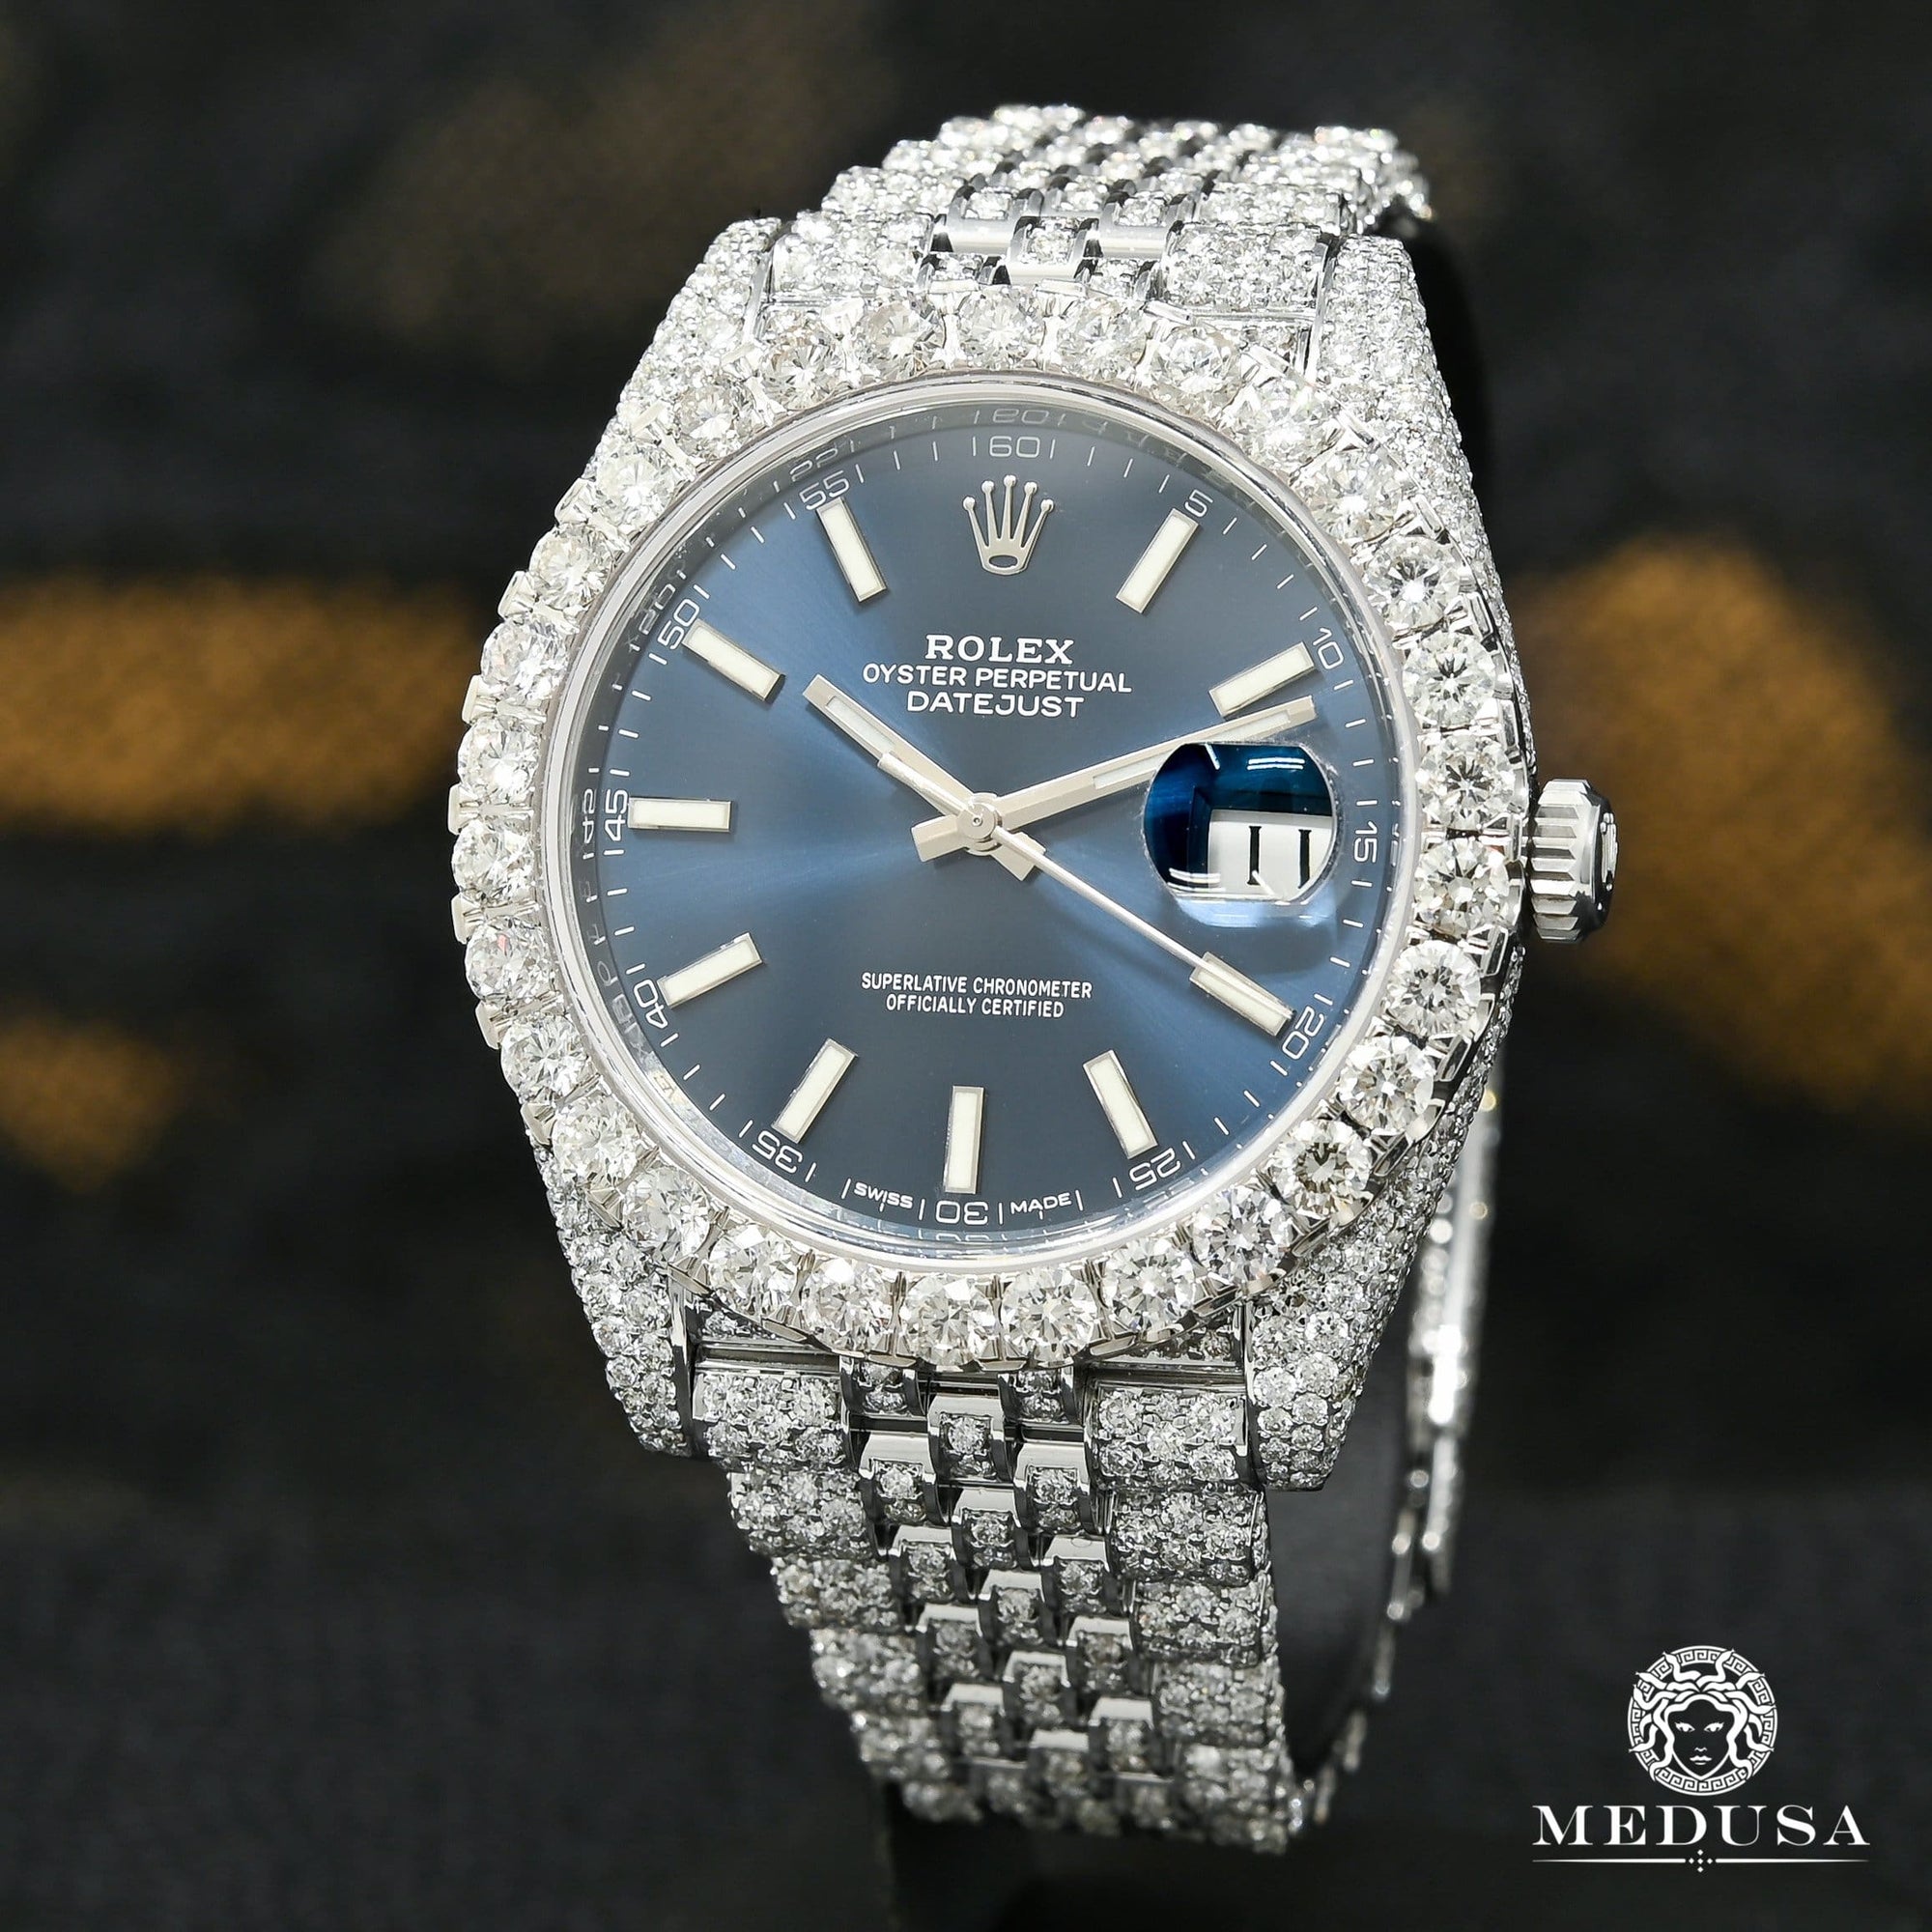 Rolex watch | Rolex Datejust Men's Watch 41mm - Jubilee Full Blue Stainless